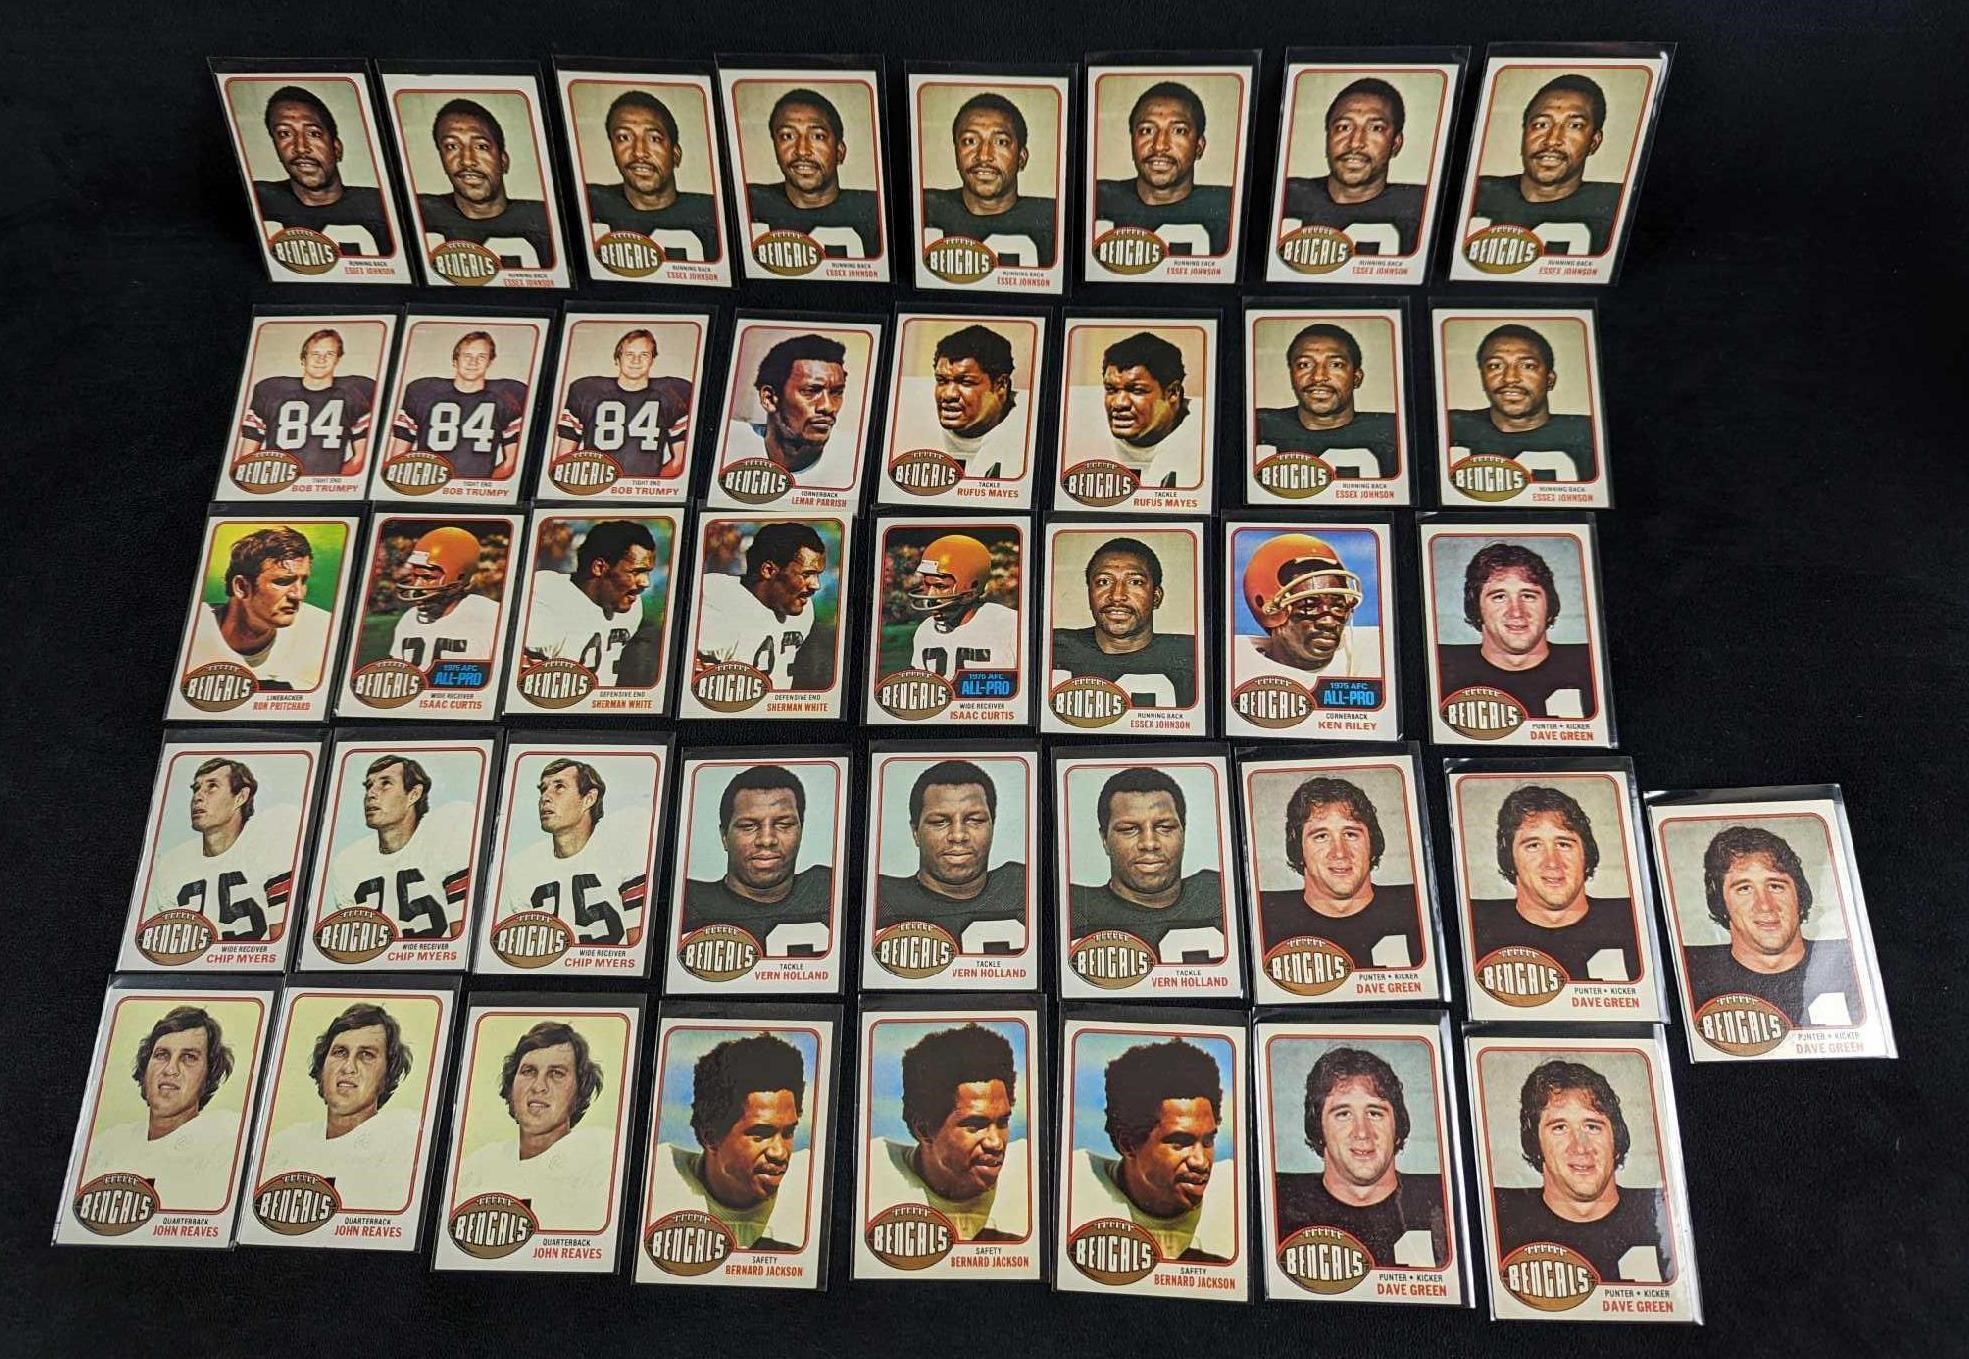 41 1976 Cincinnati Bengals Topps Football Cards